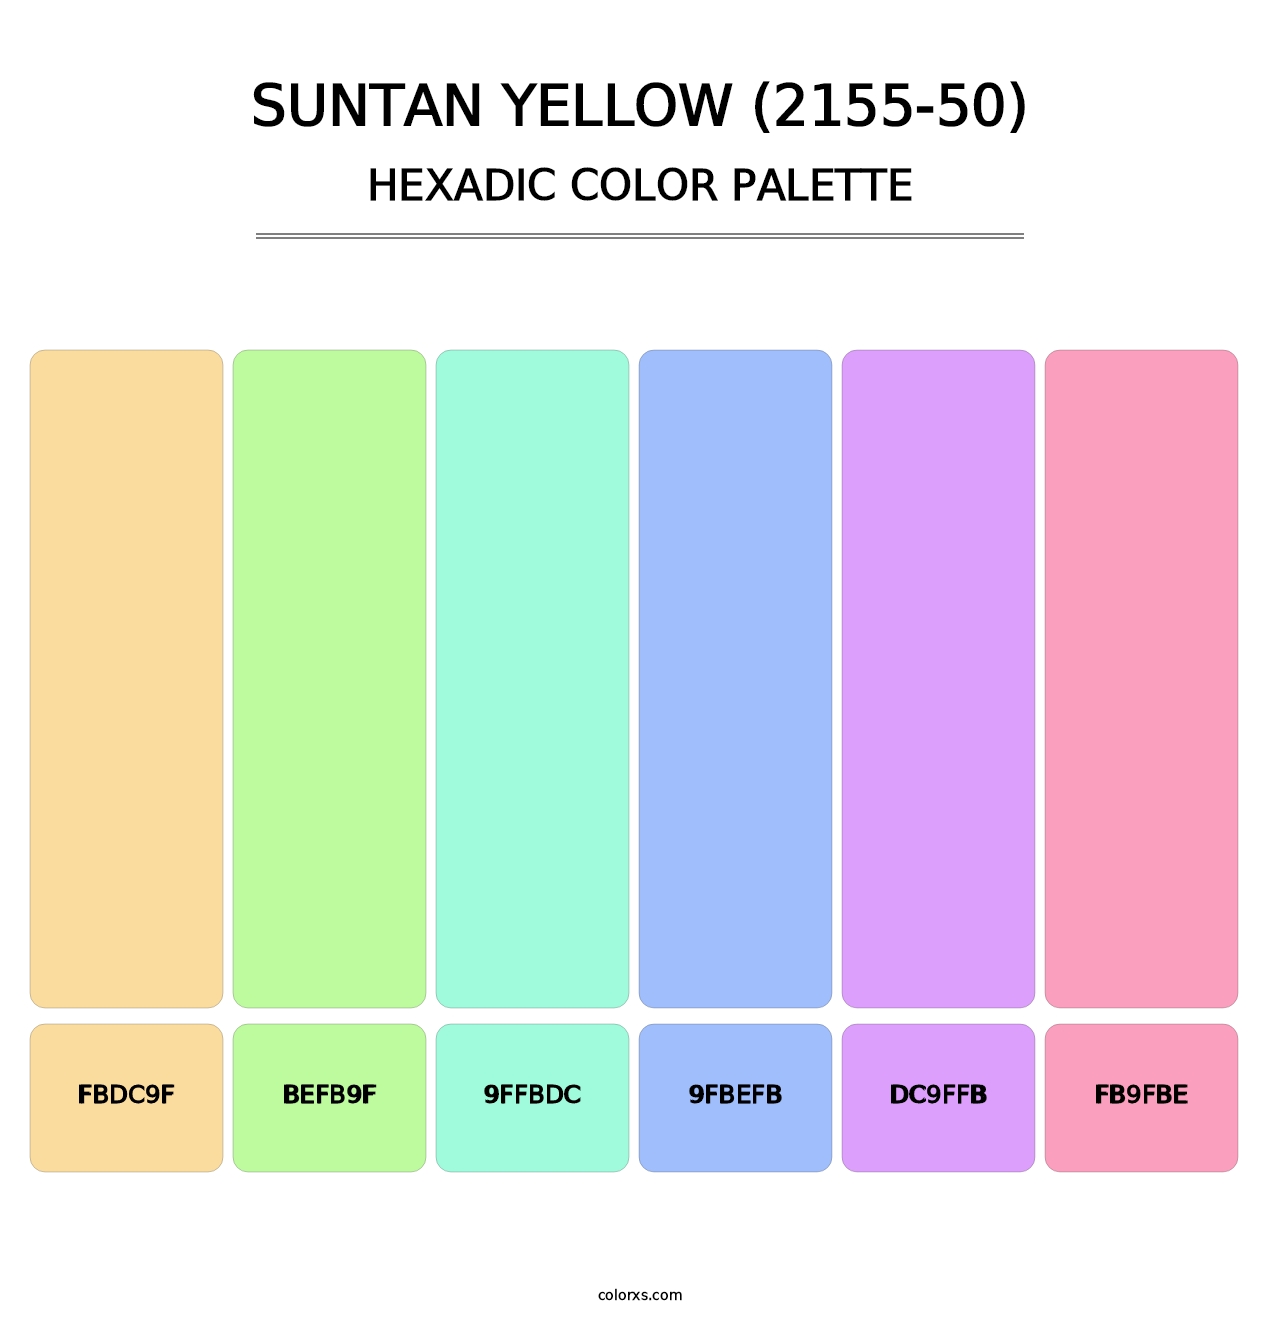 Suntan Yellow (2155-50) - Hexadic Color Palette